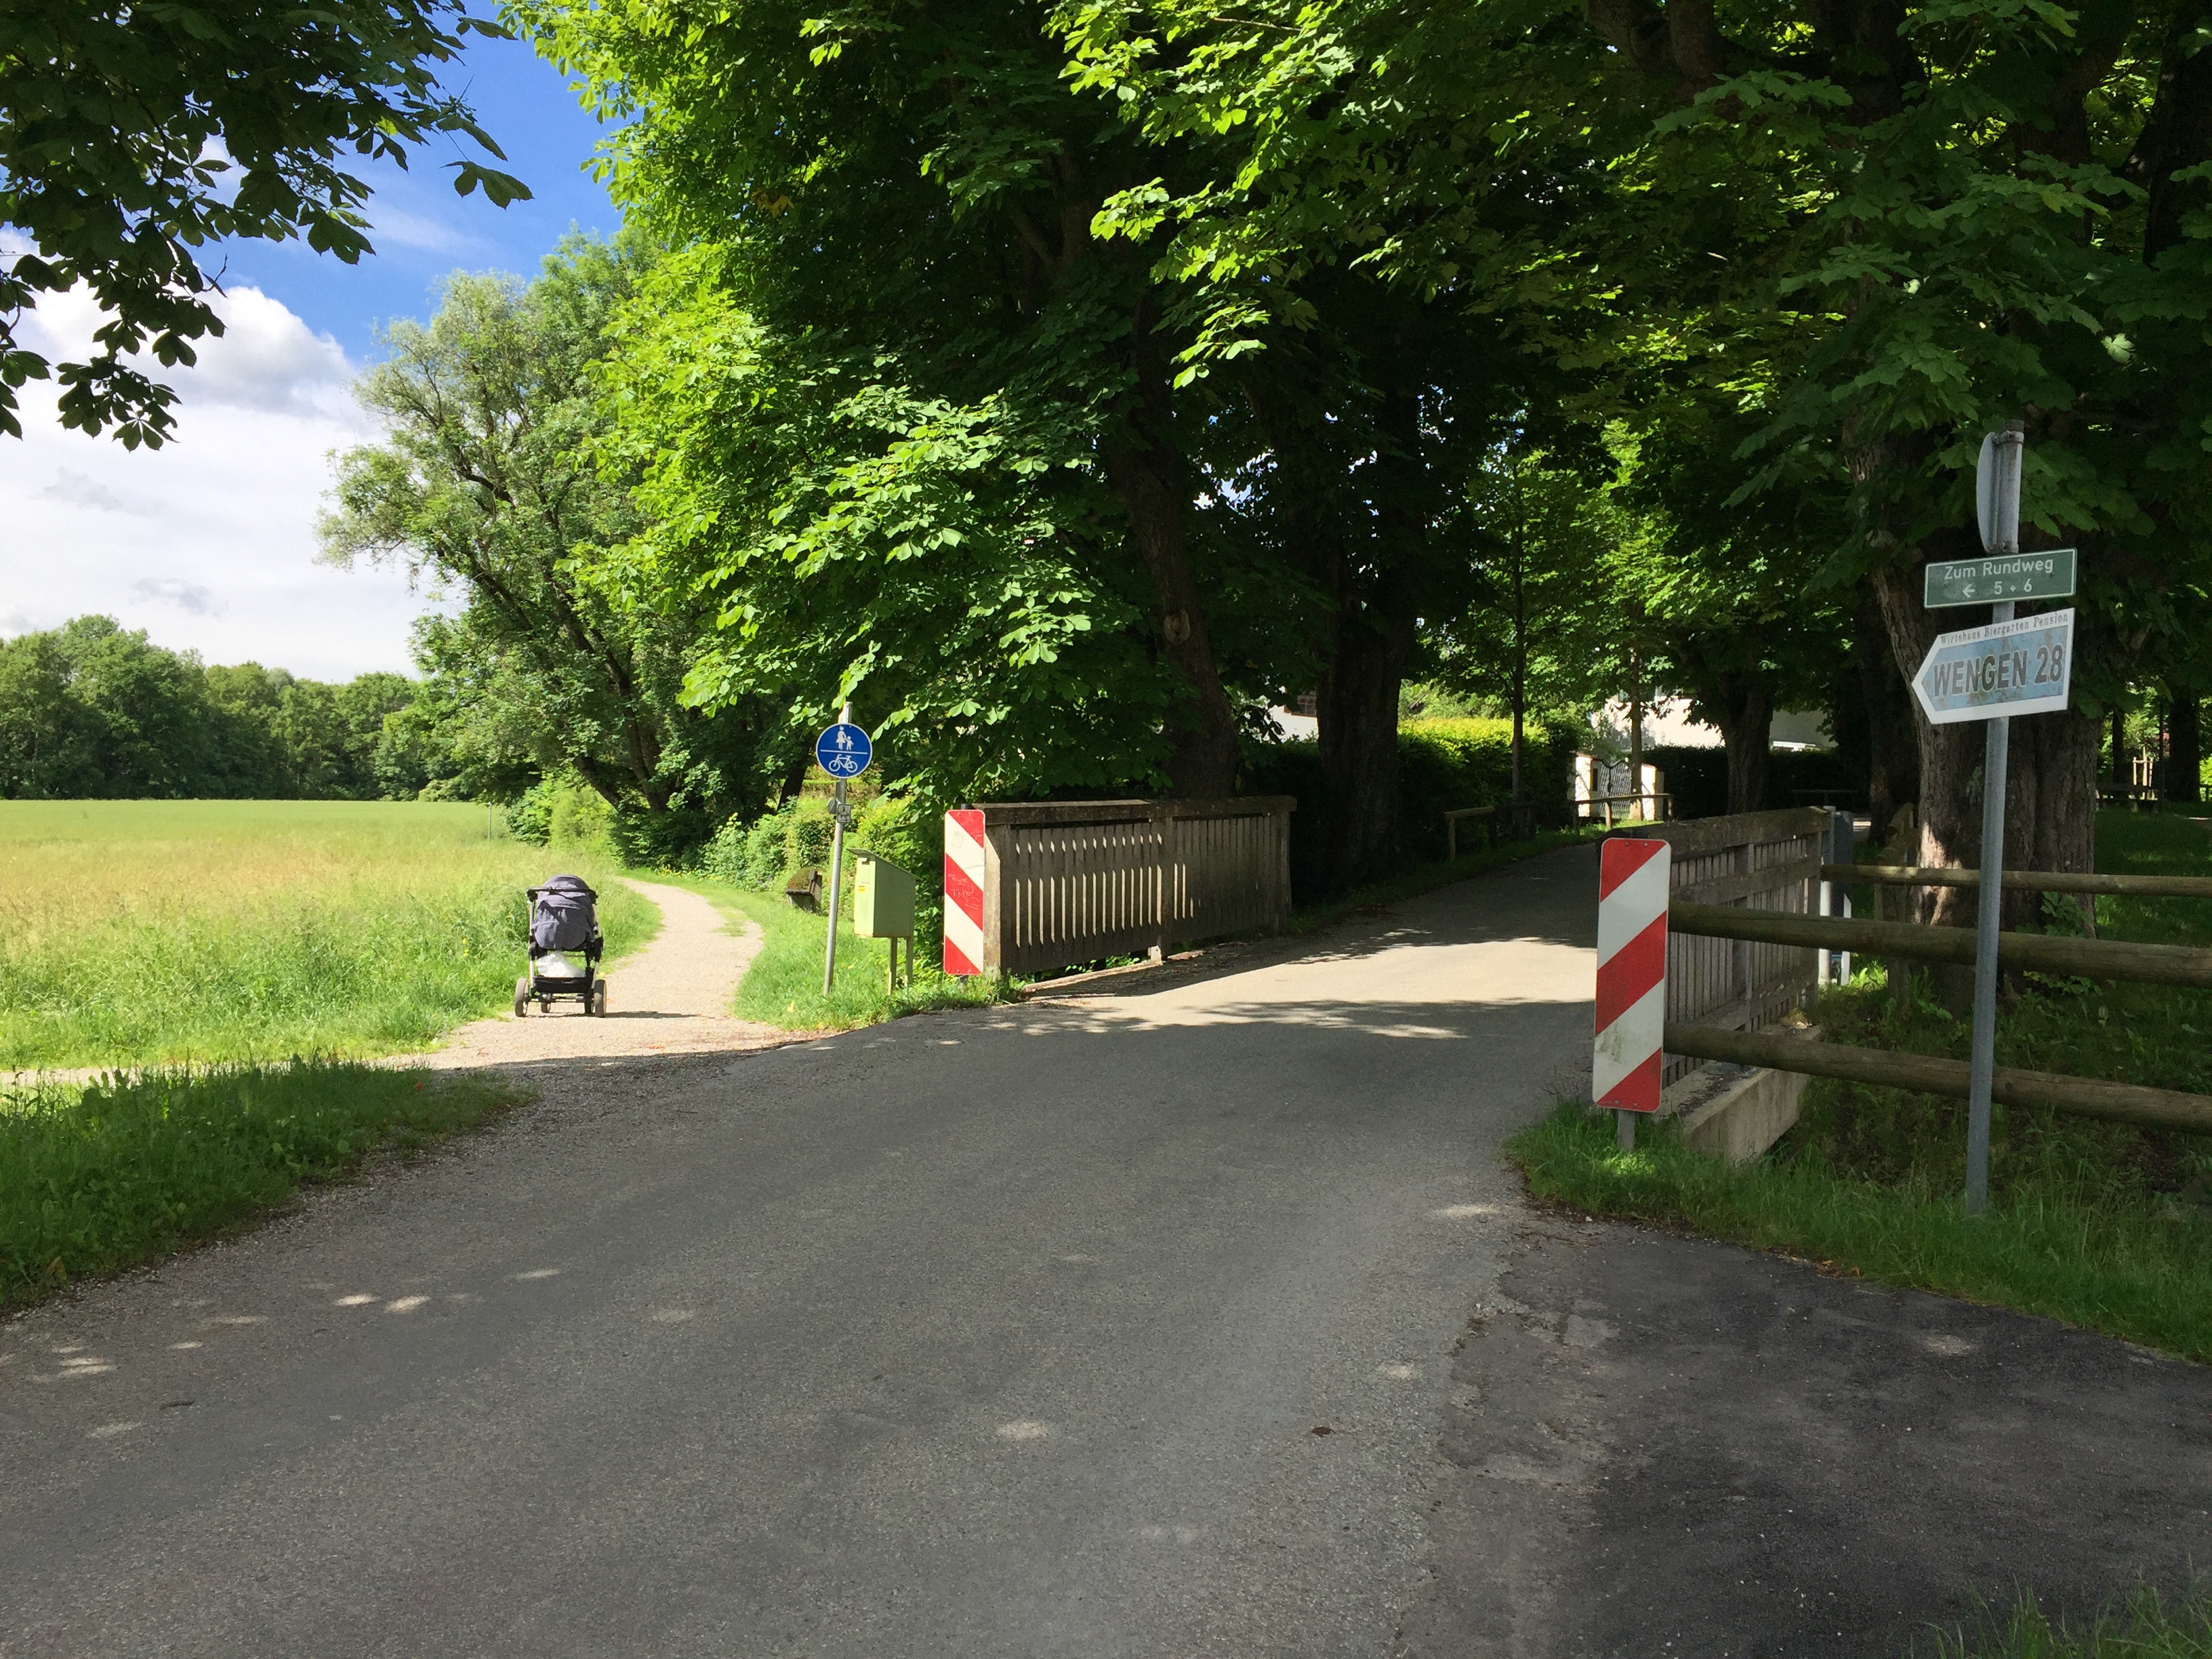 Startpunkt der Tour: Beschilderung "Zum Rundweg 5 + 6", vor der Brücke links in den schmalen Weg "Am Winkelsteg".